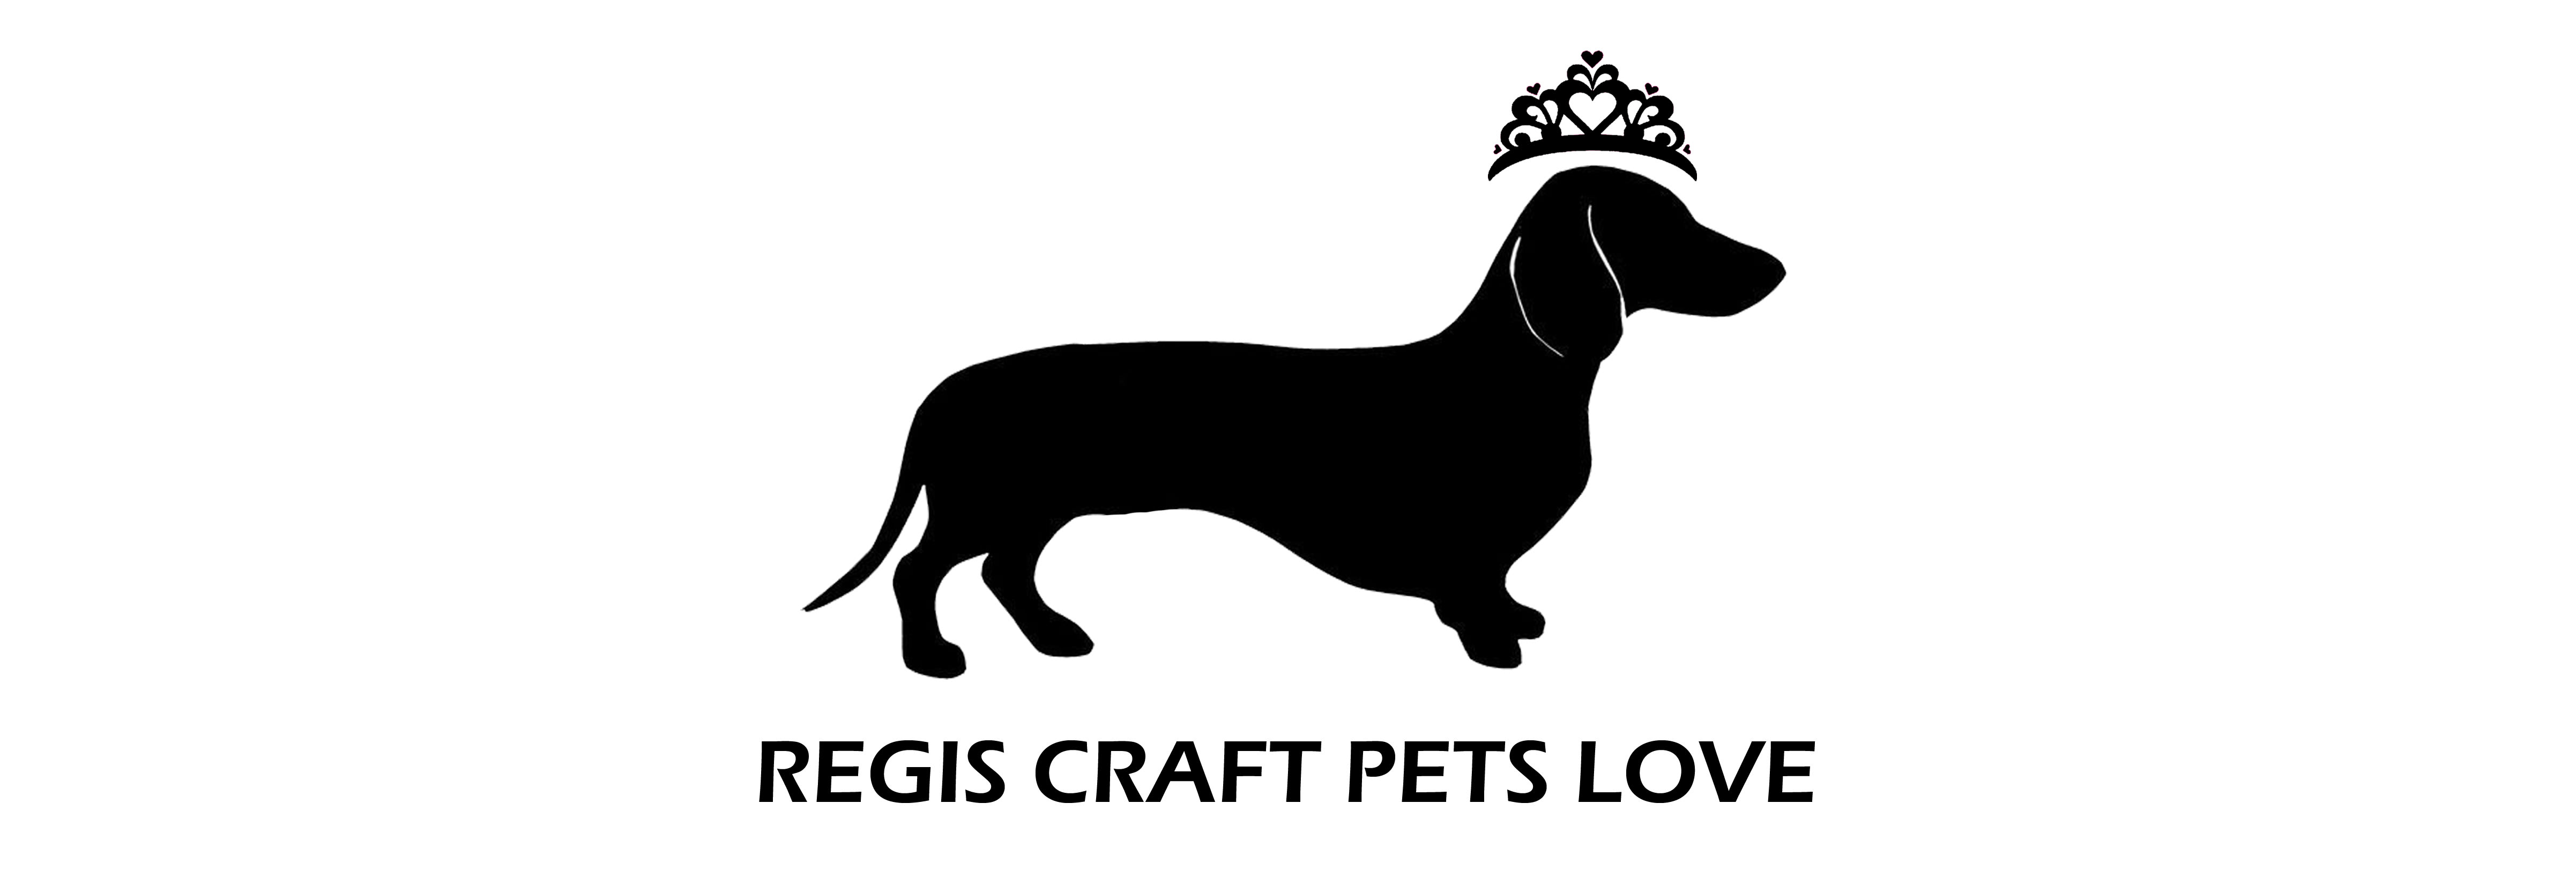 Regis Craft Pets Love